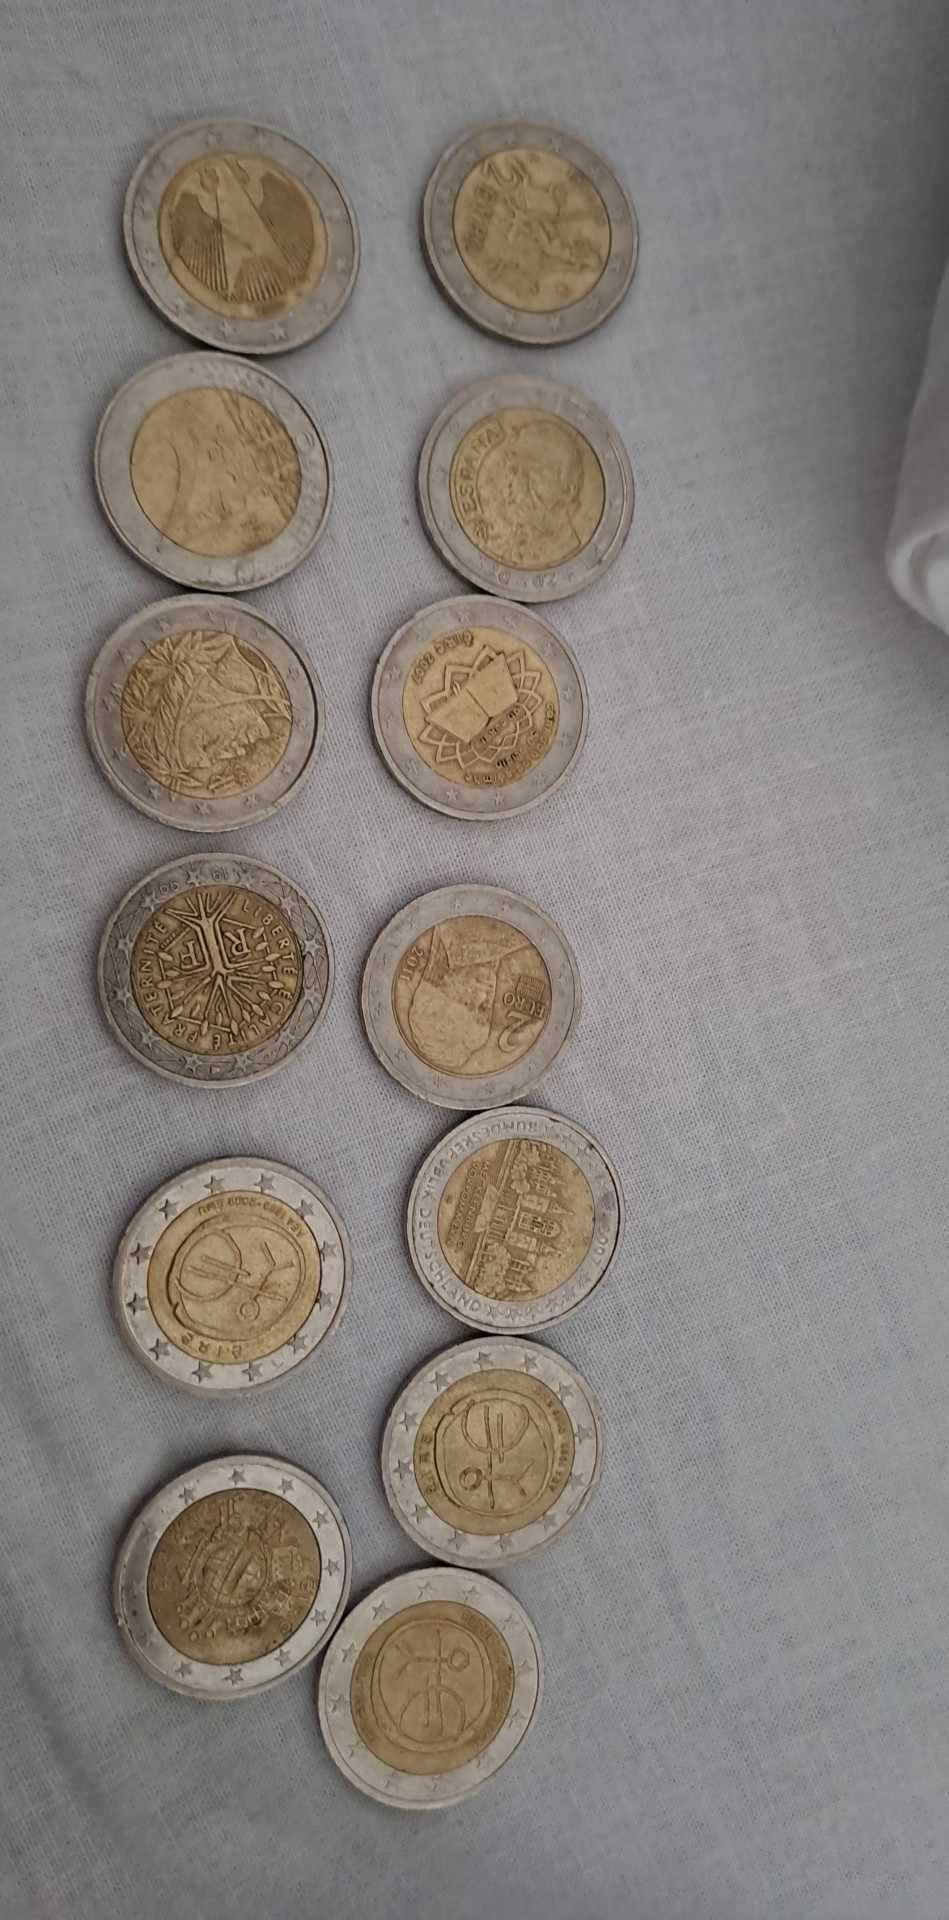 Monede 2 euro pentru colectionari